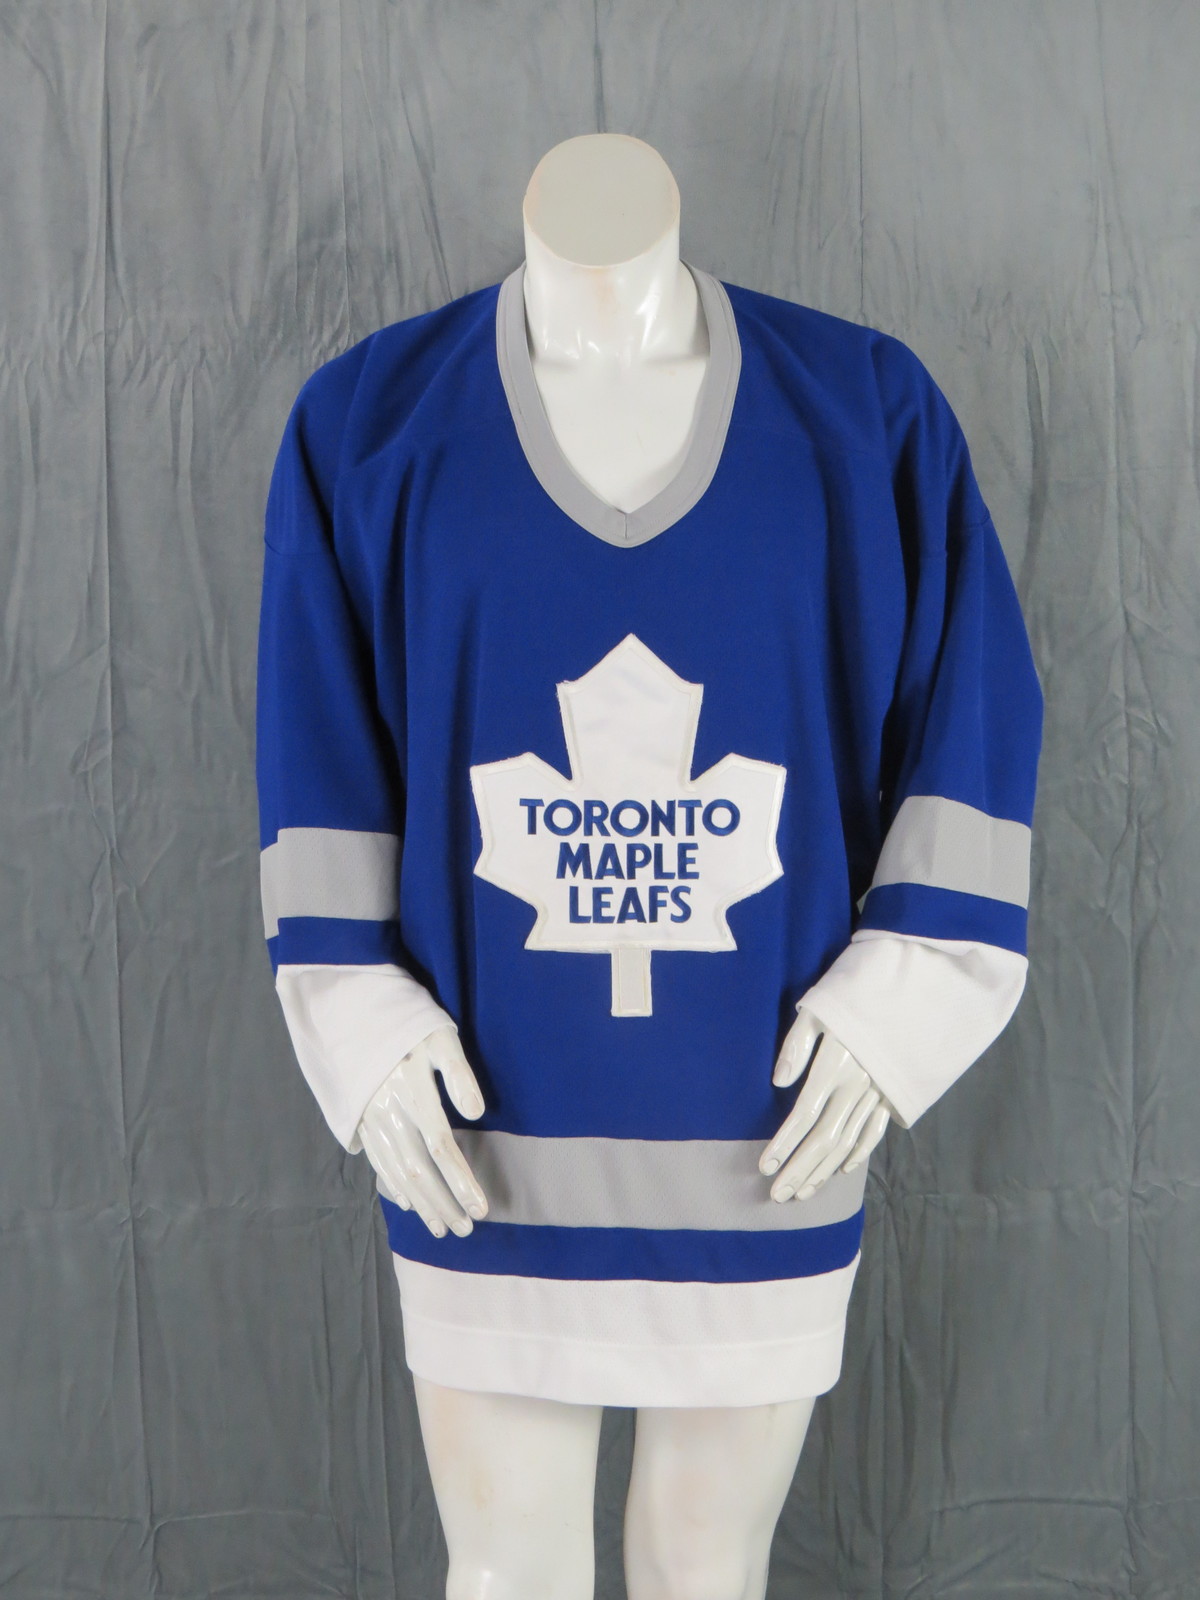 Tornoto Maple Leafs Jersey (Retro) - Early 2000s Away Jersey by CCM - Men's XL - $65.00